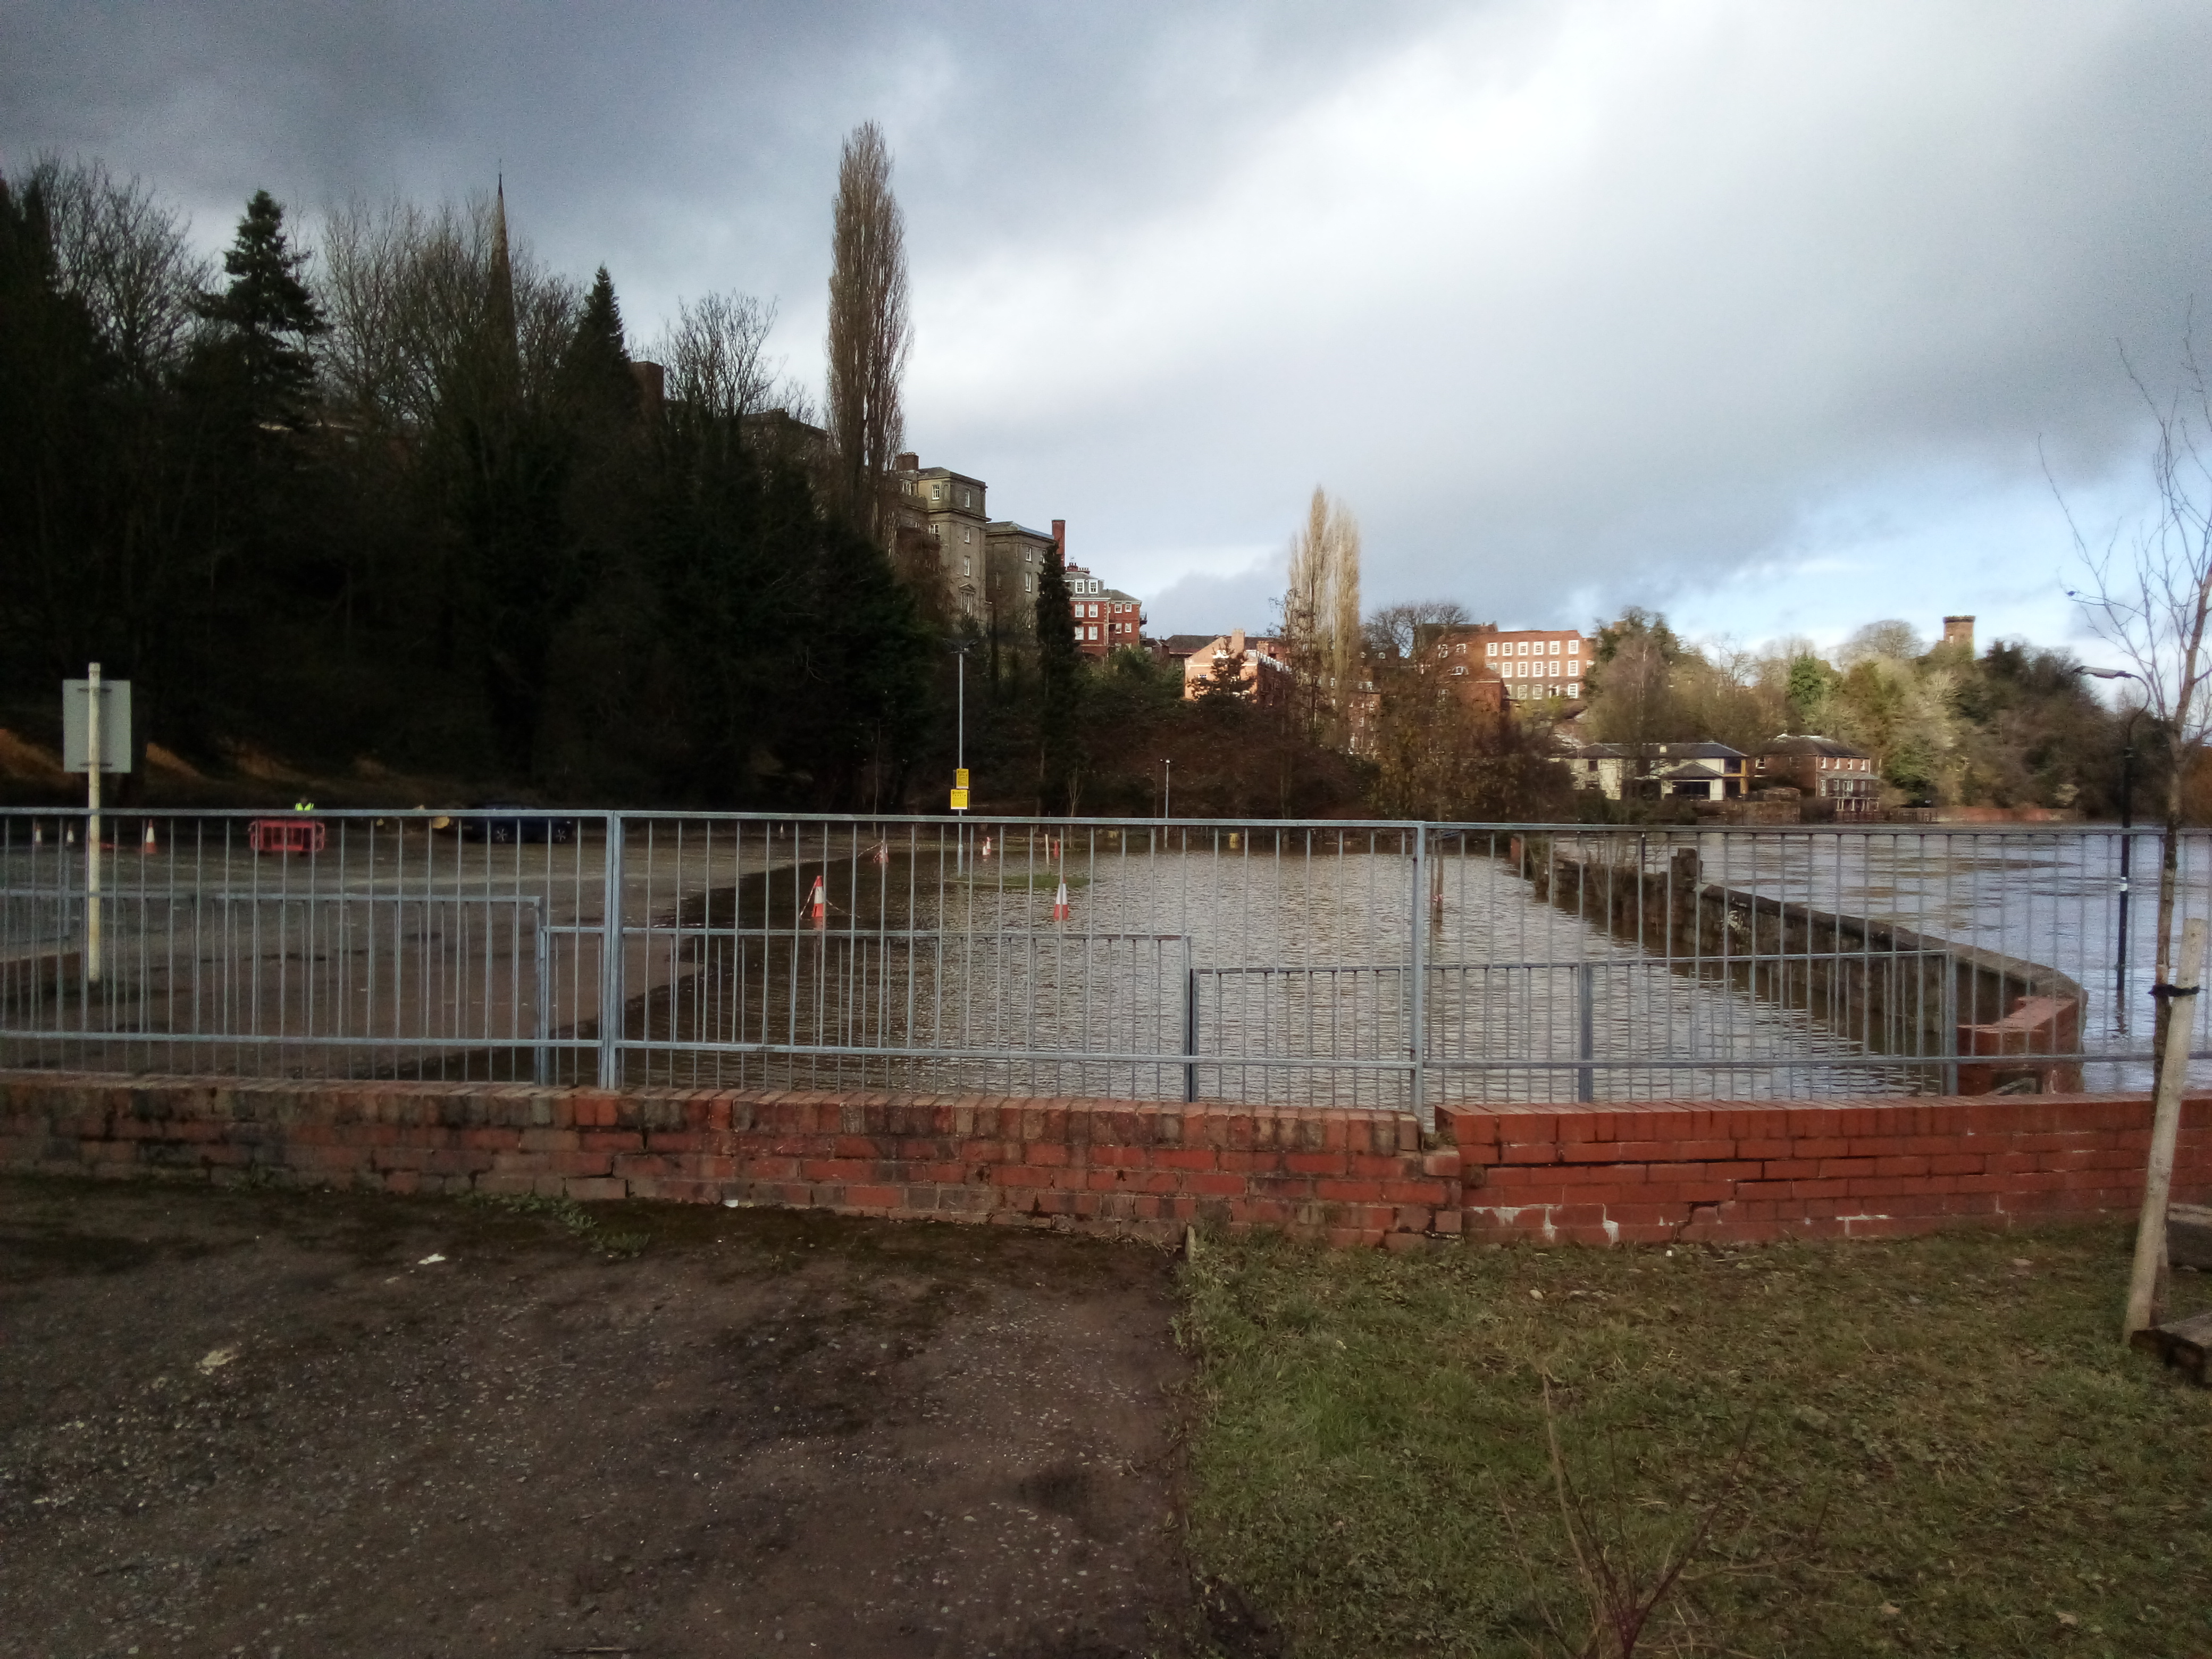 Car park in Shrewsbury half-flooded.